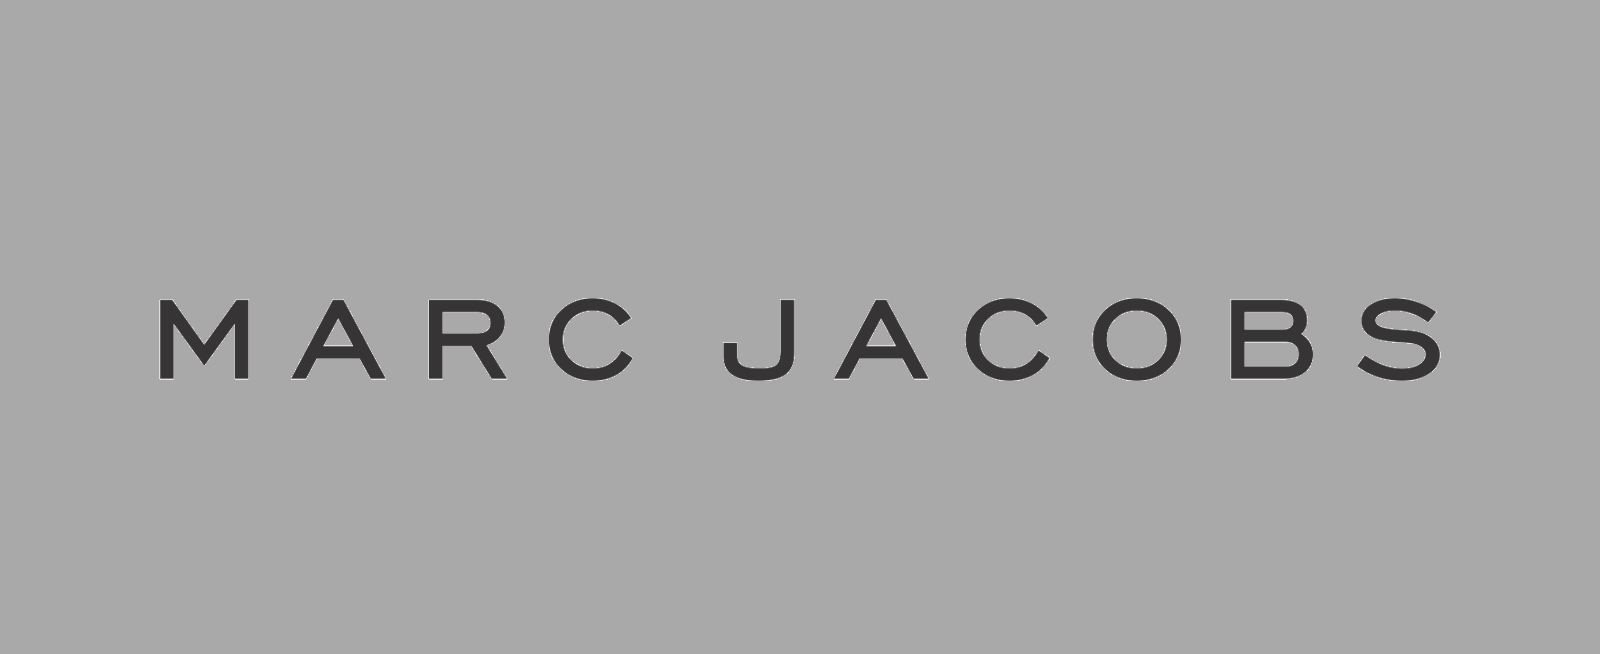 Marc Jacobs Logo - CastMeMarc on Instagram Spots Fresh Faces for Marc Jacobs' Fall ...